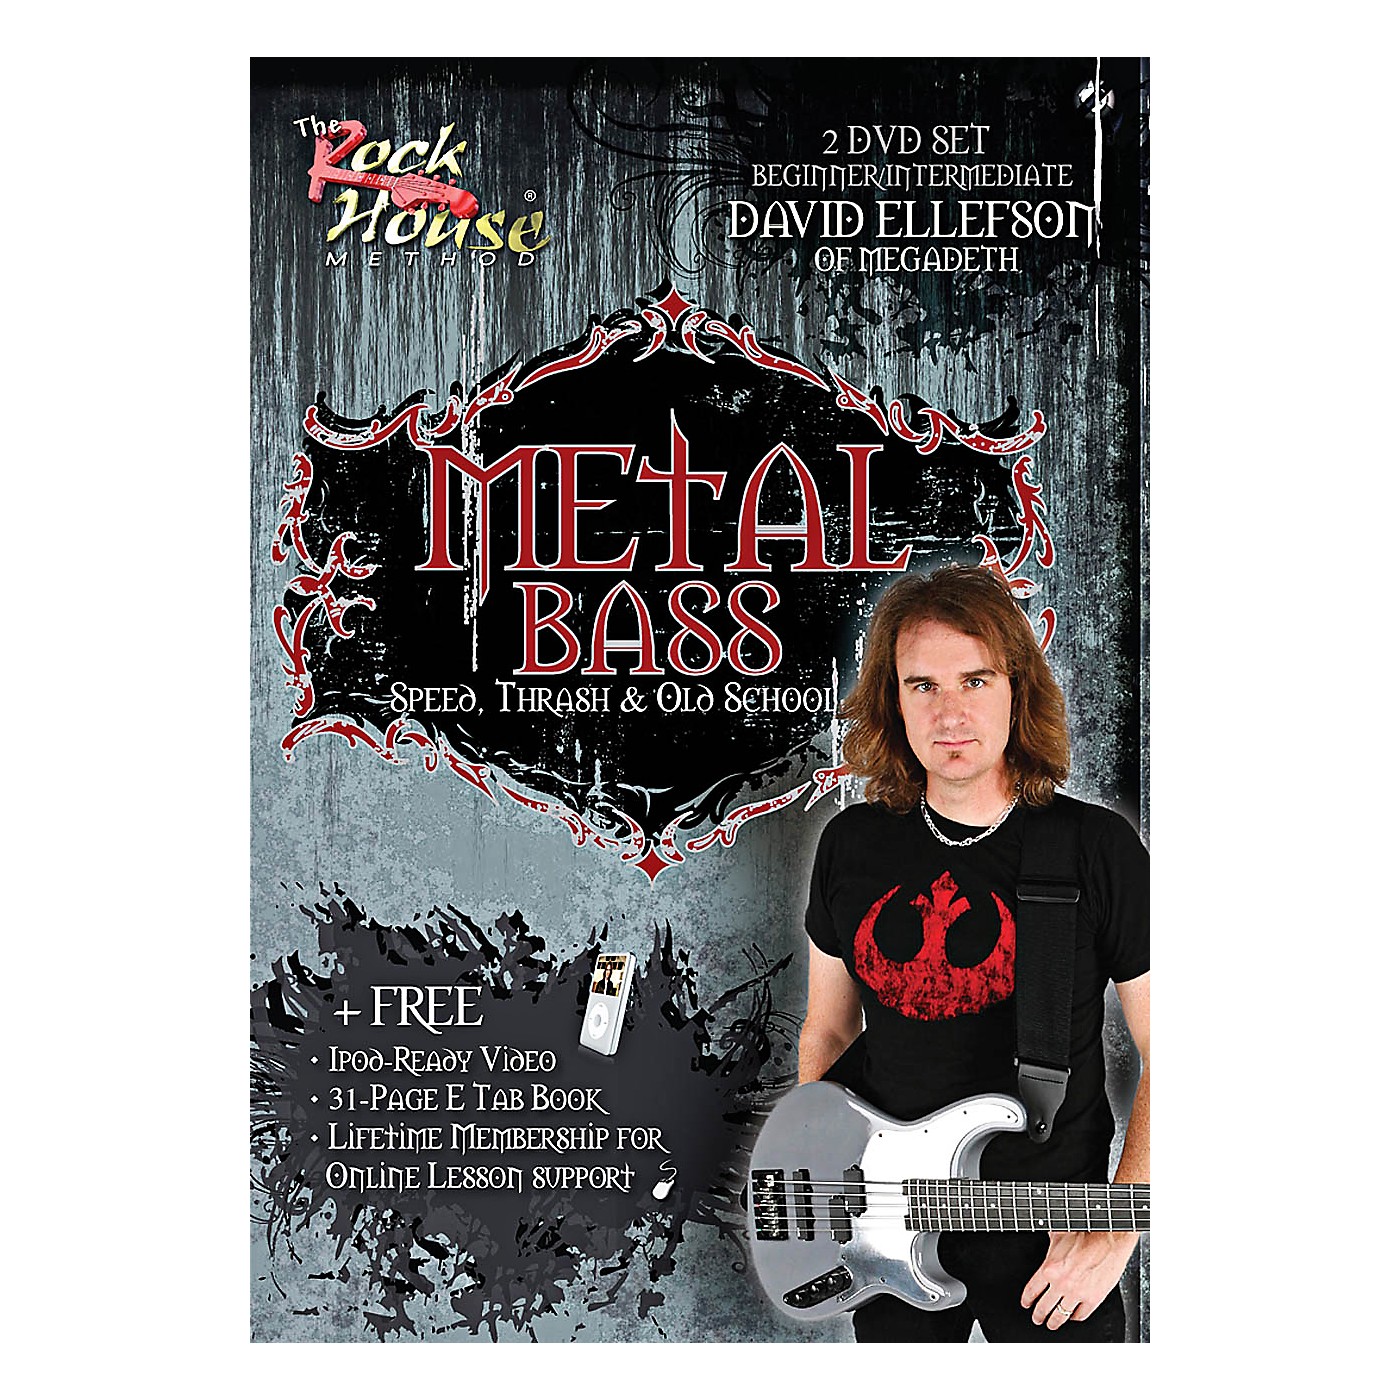 Rock House David Ellefson of Megadeth Metal Bass Speed, Thrash & Old School DVD thumbnail